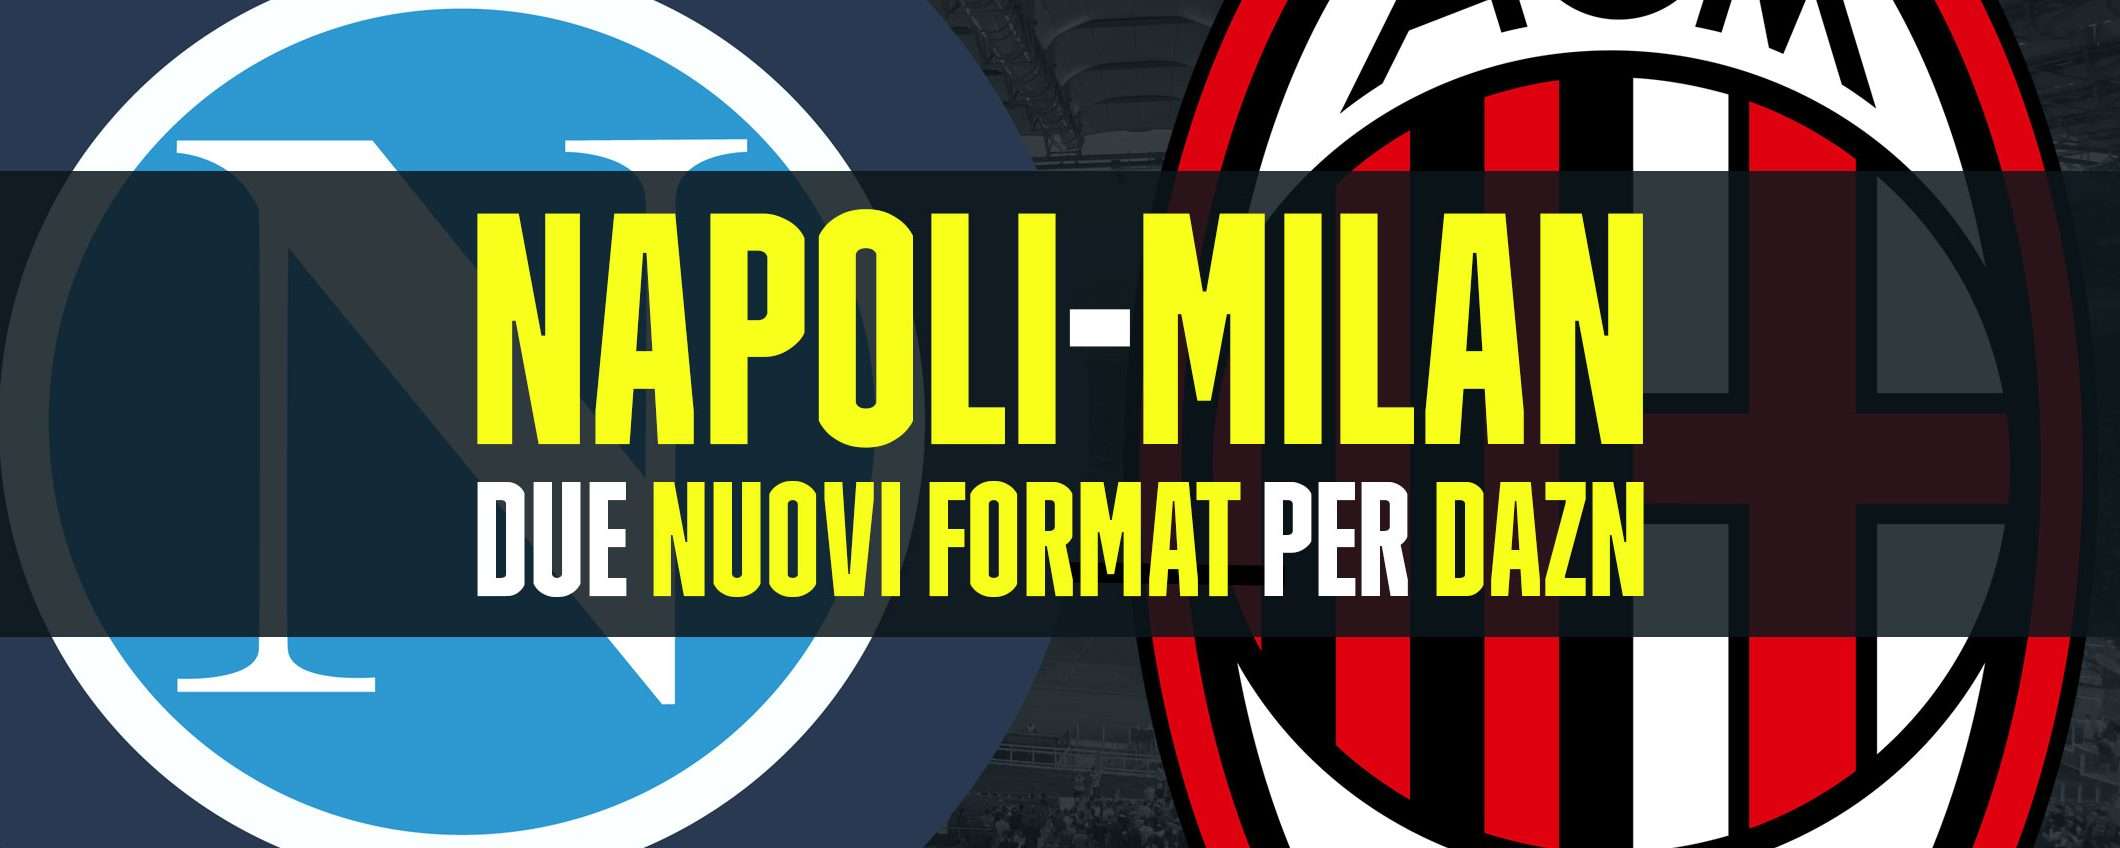 DAZN lancia due nuovi format in vista di Napoli-Milan